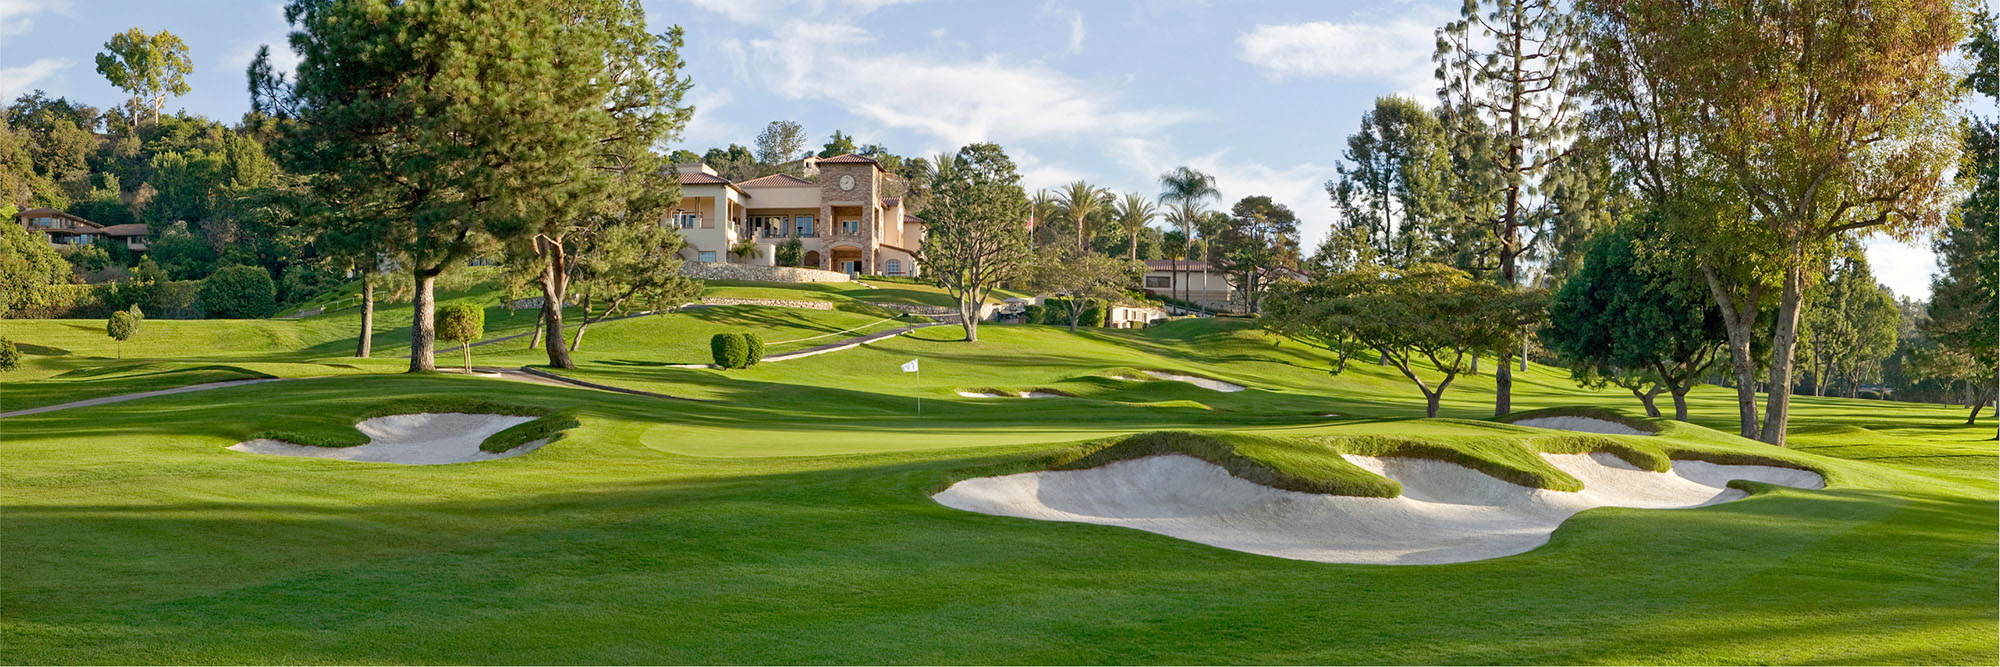 Golf Course Image - Hacienda Golf Club No. 9